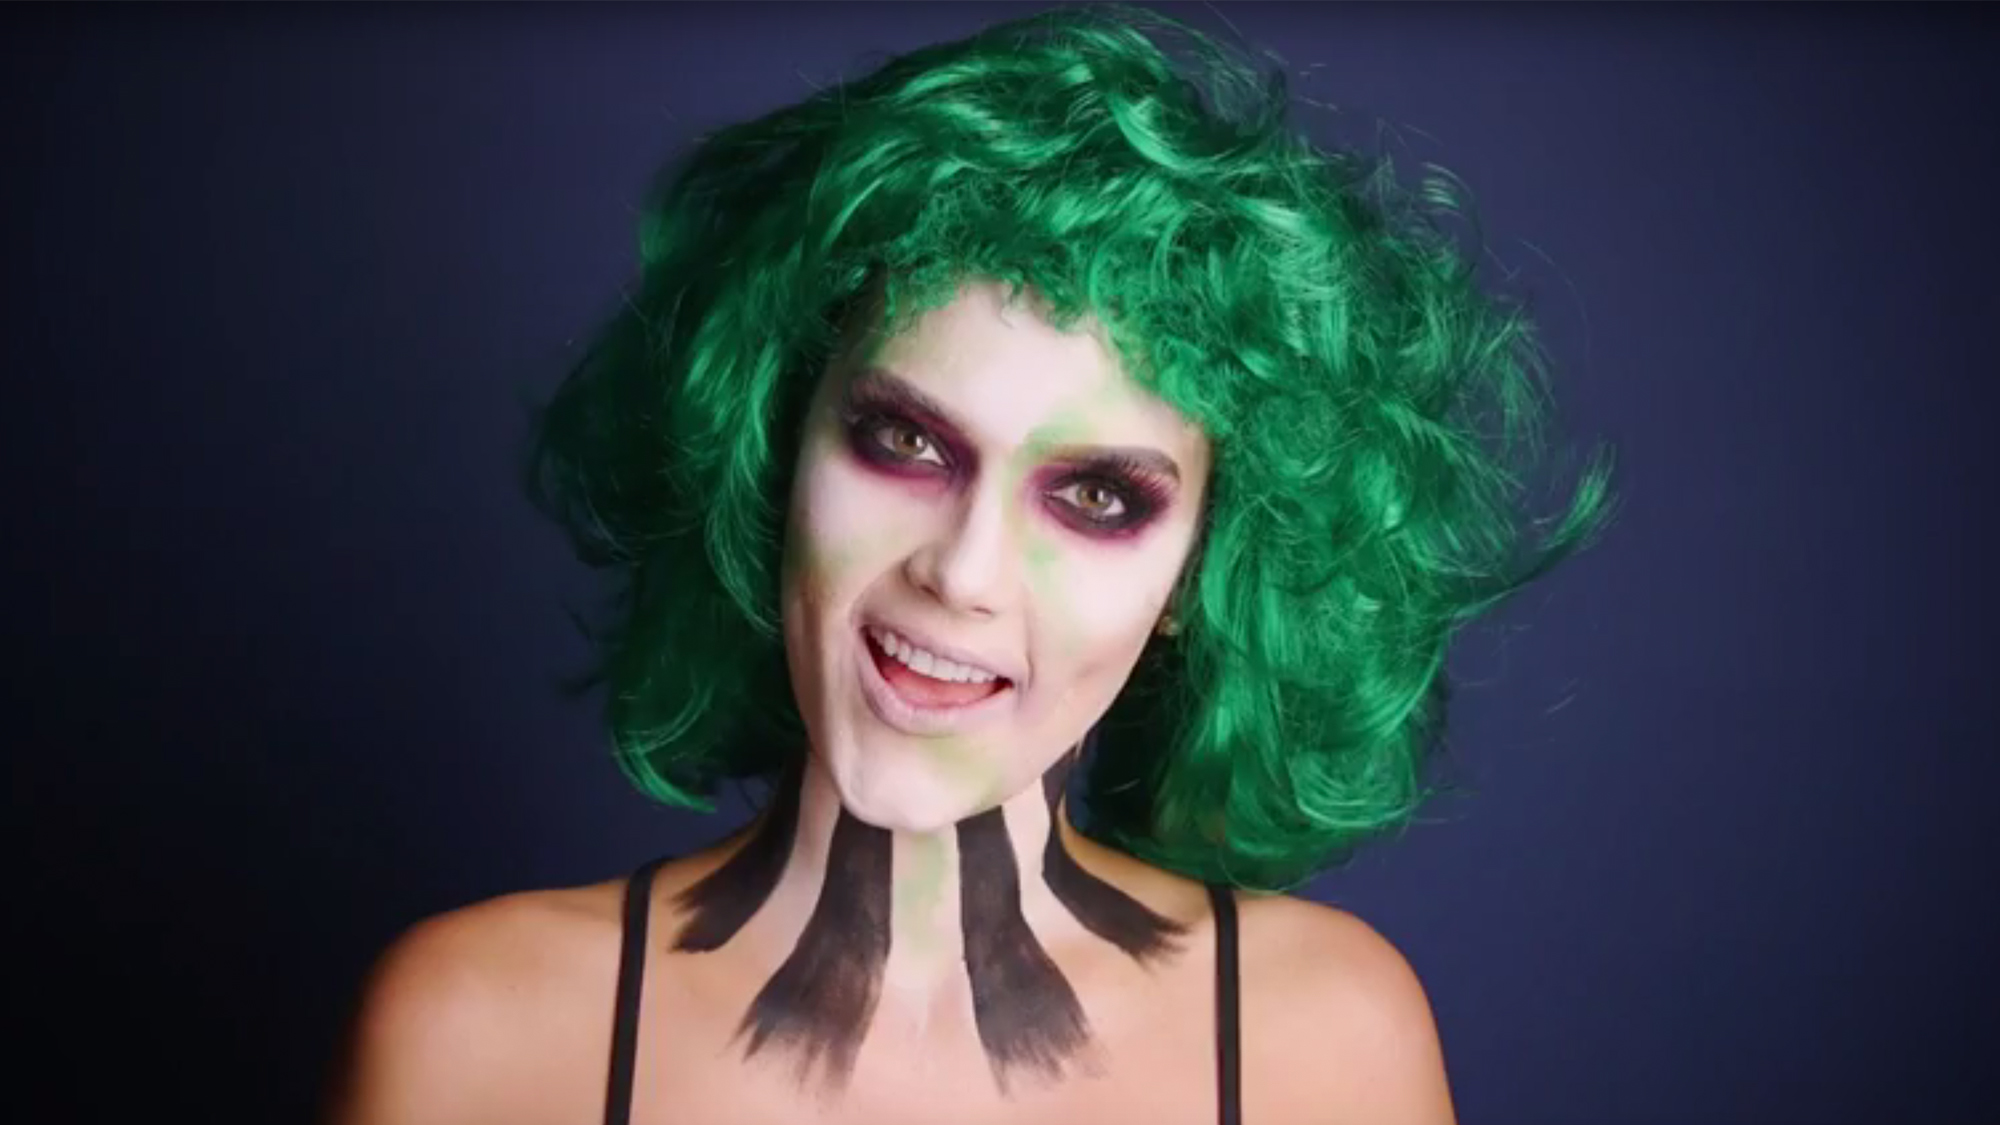 beetlejuice costume makeup